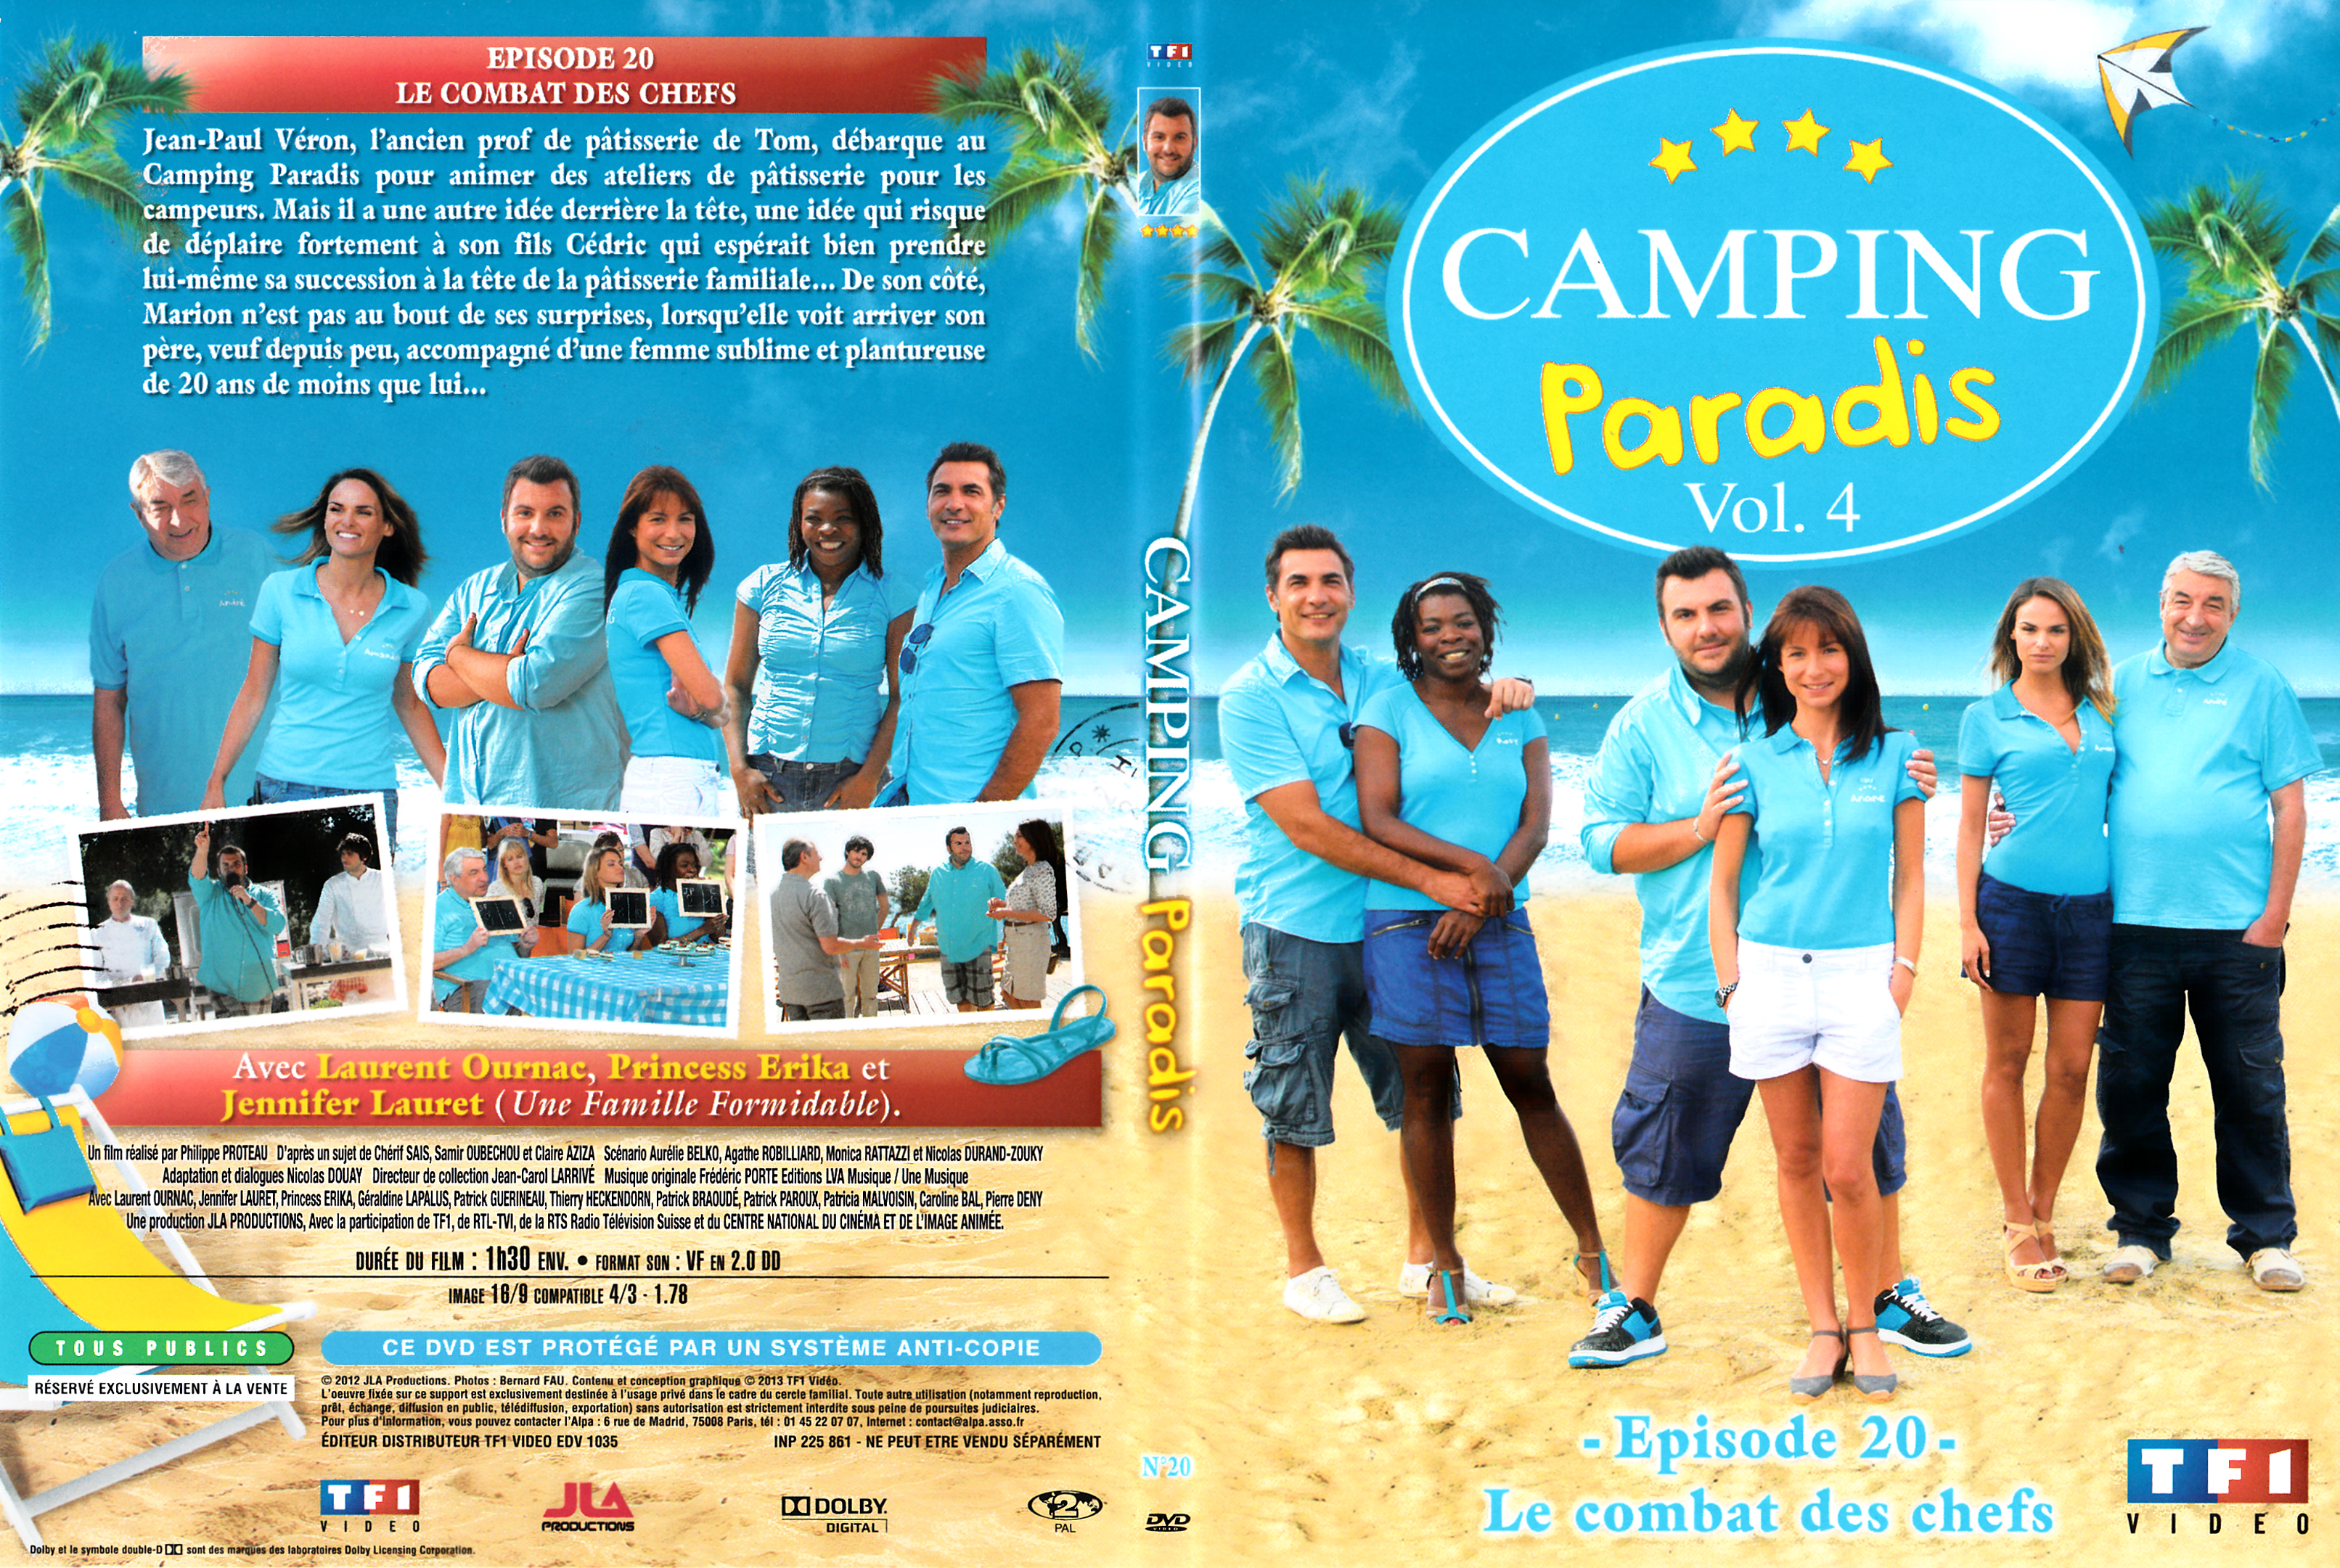 Jaquette DVD Camping Paradis vol 20